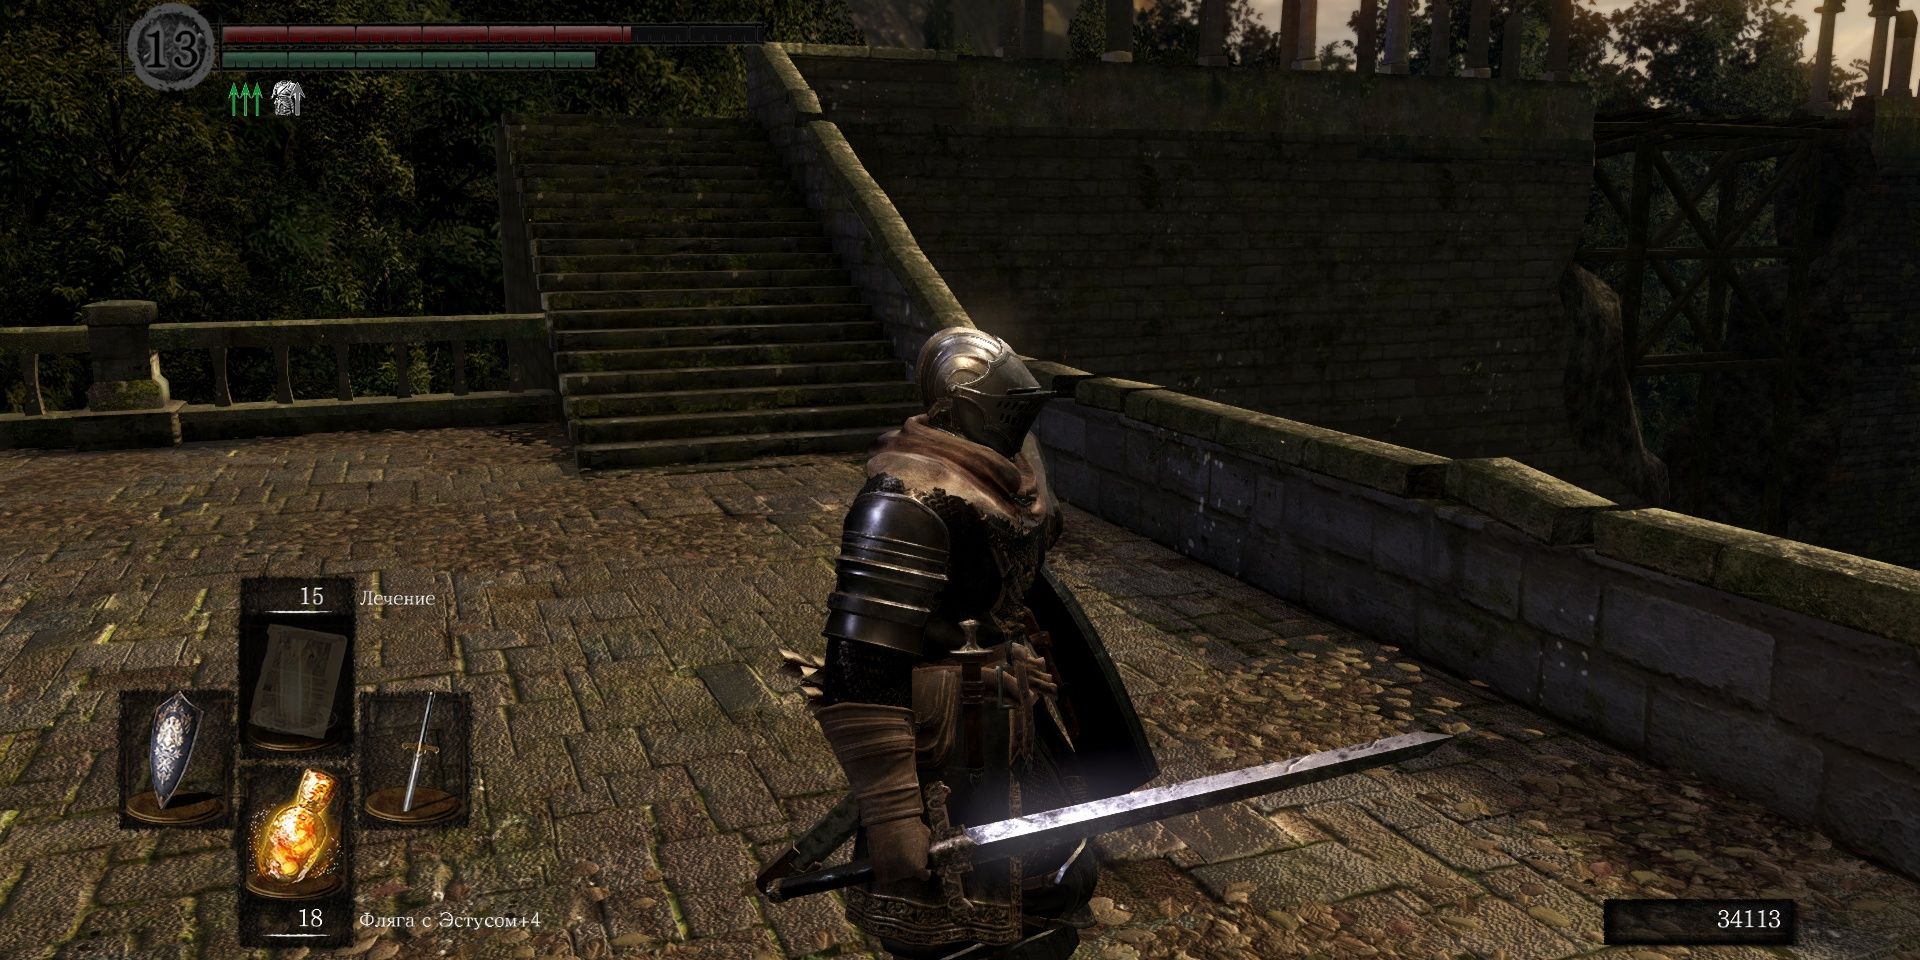 The Sunlight Straight Sword in Dark Sould 3